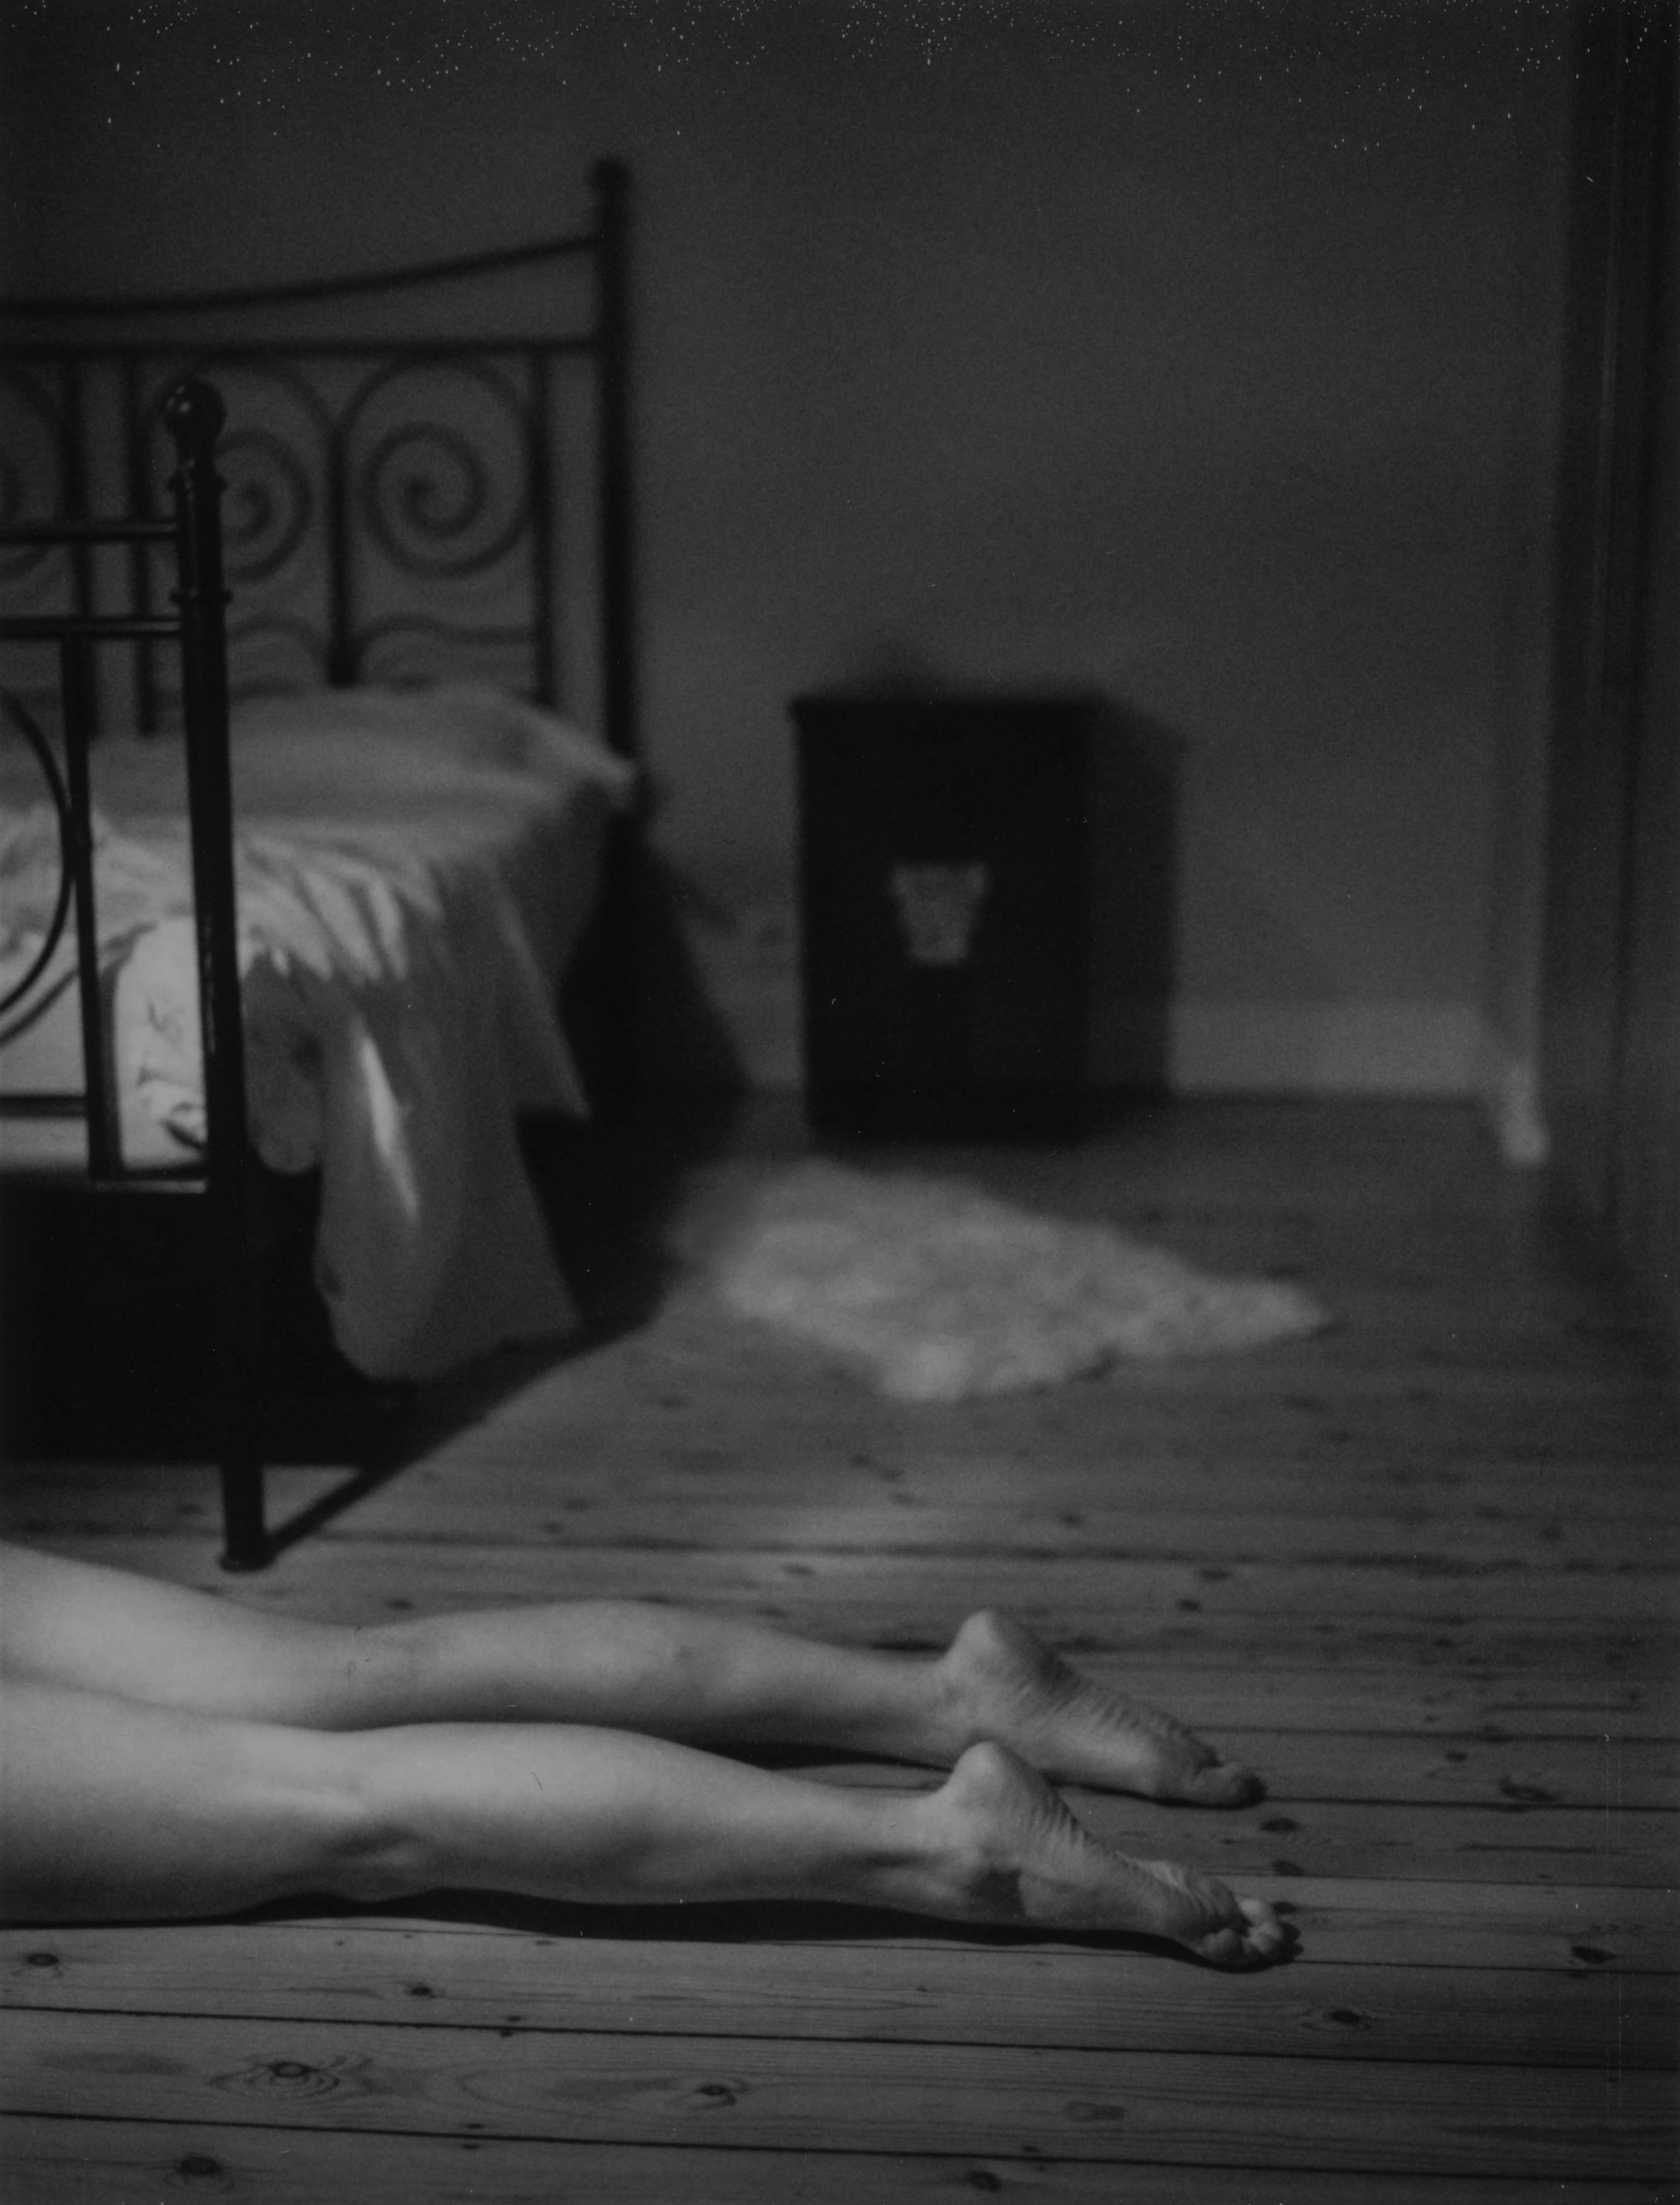 Nude Photograph Kirsten Thys van den Audenaerde - No Place like Home - 21e siècle, Polaroïd, Nu, Photographie, Femmes